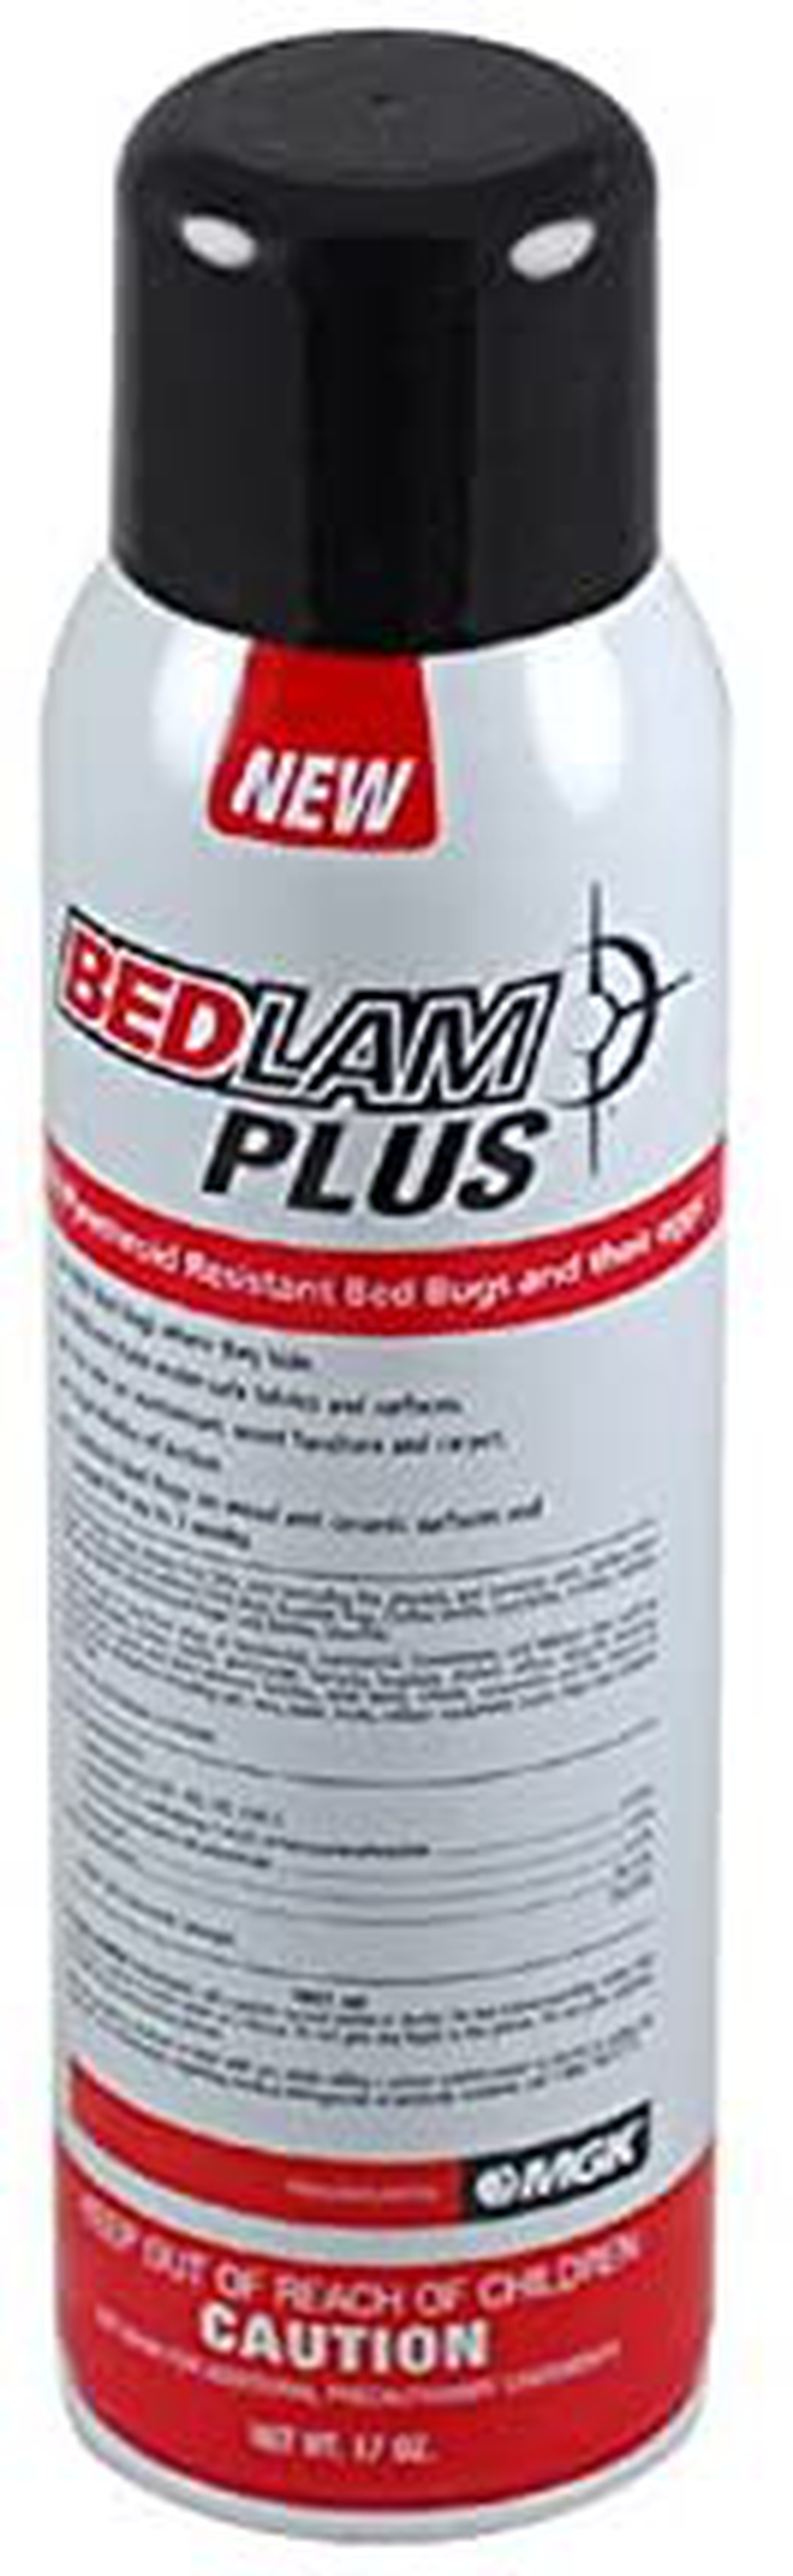 Bedlam Plus Bed Bug Aerosol, 1 can